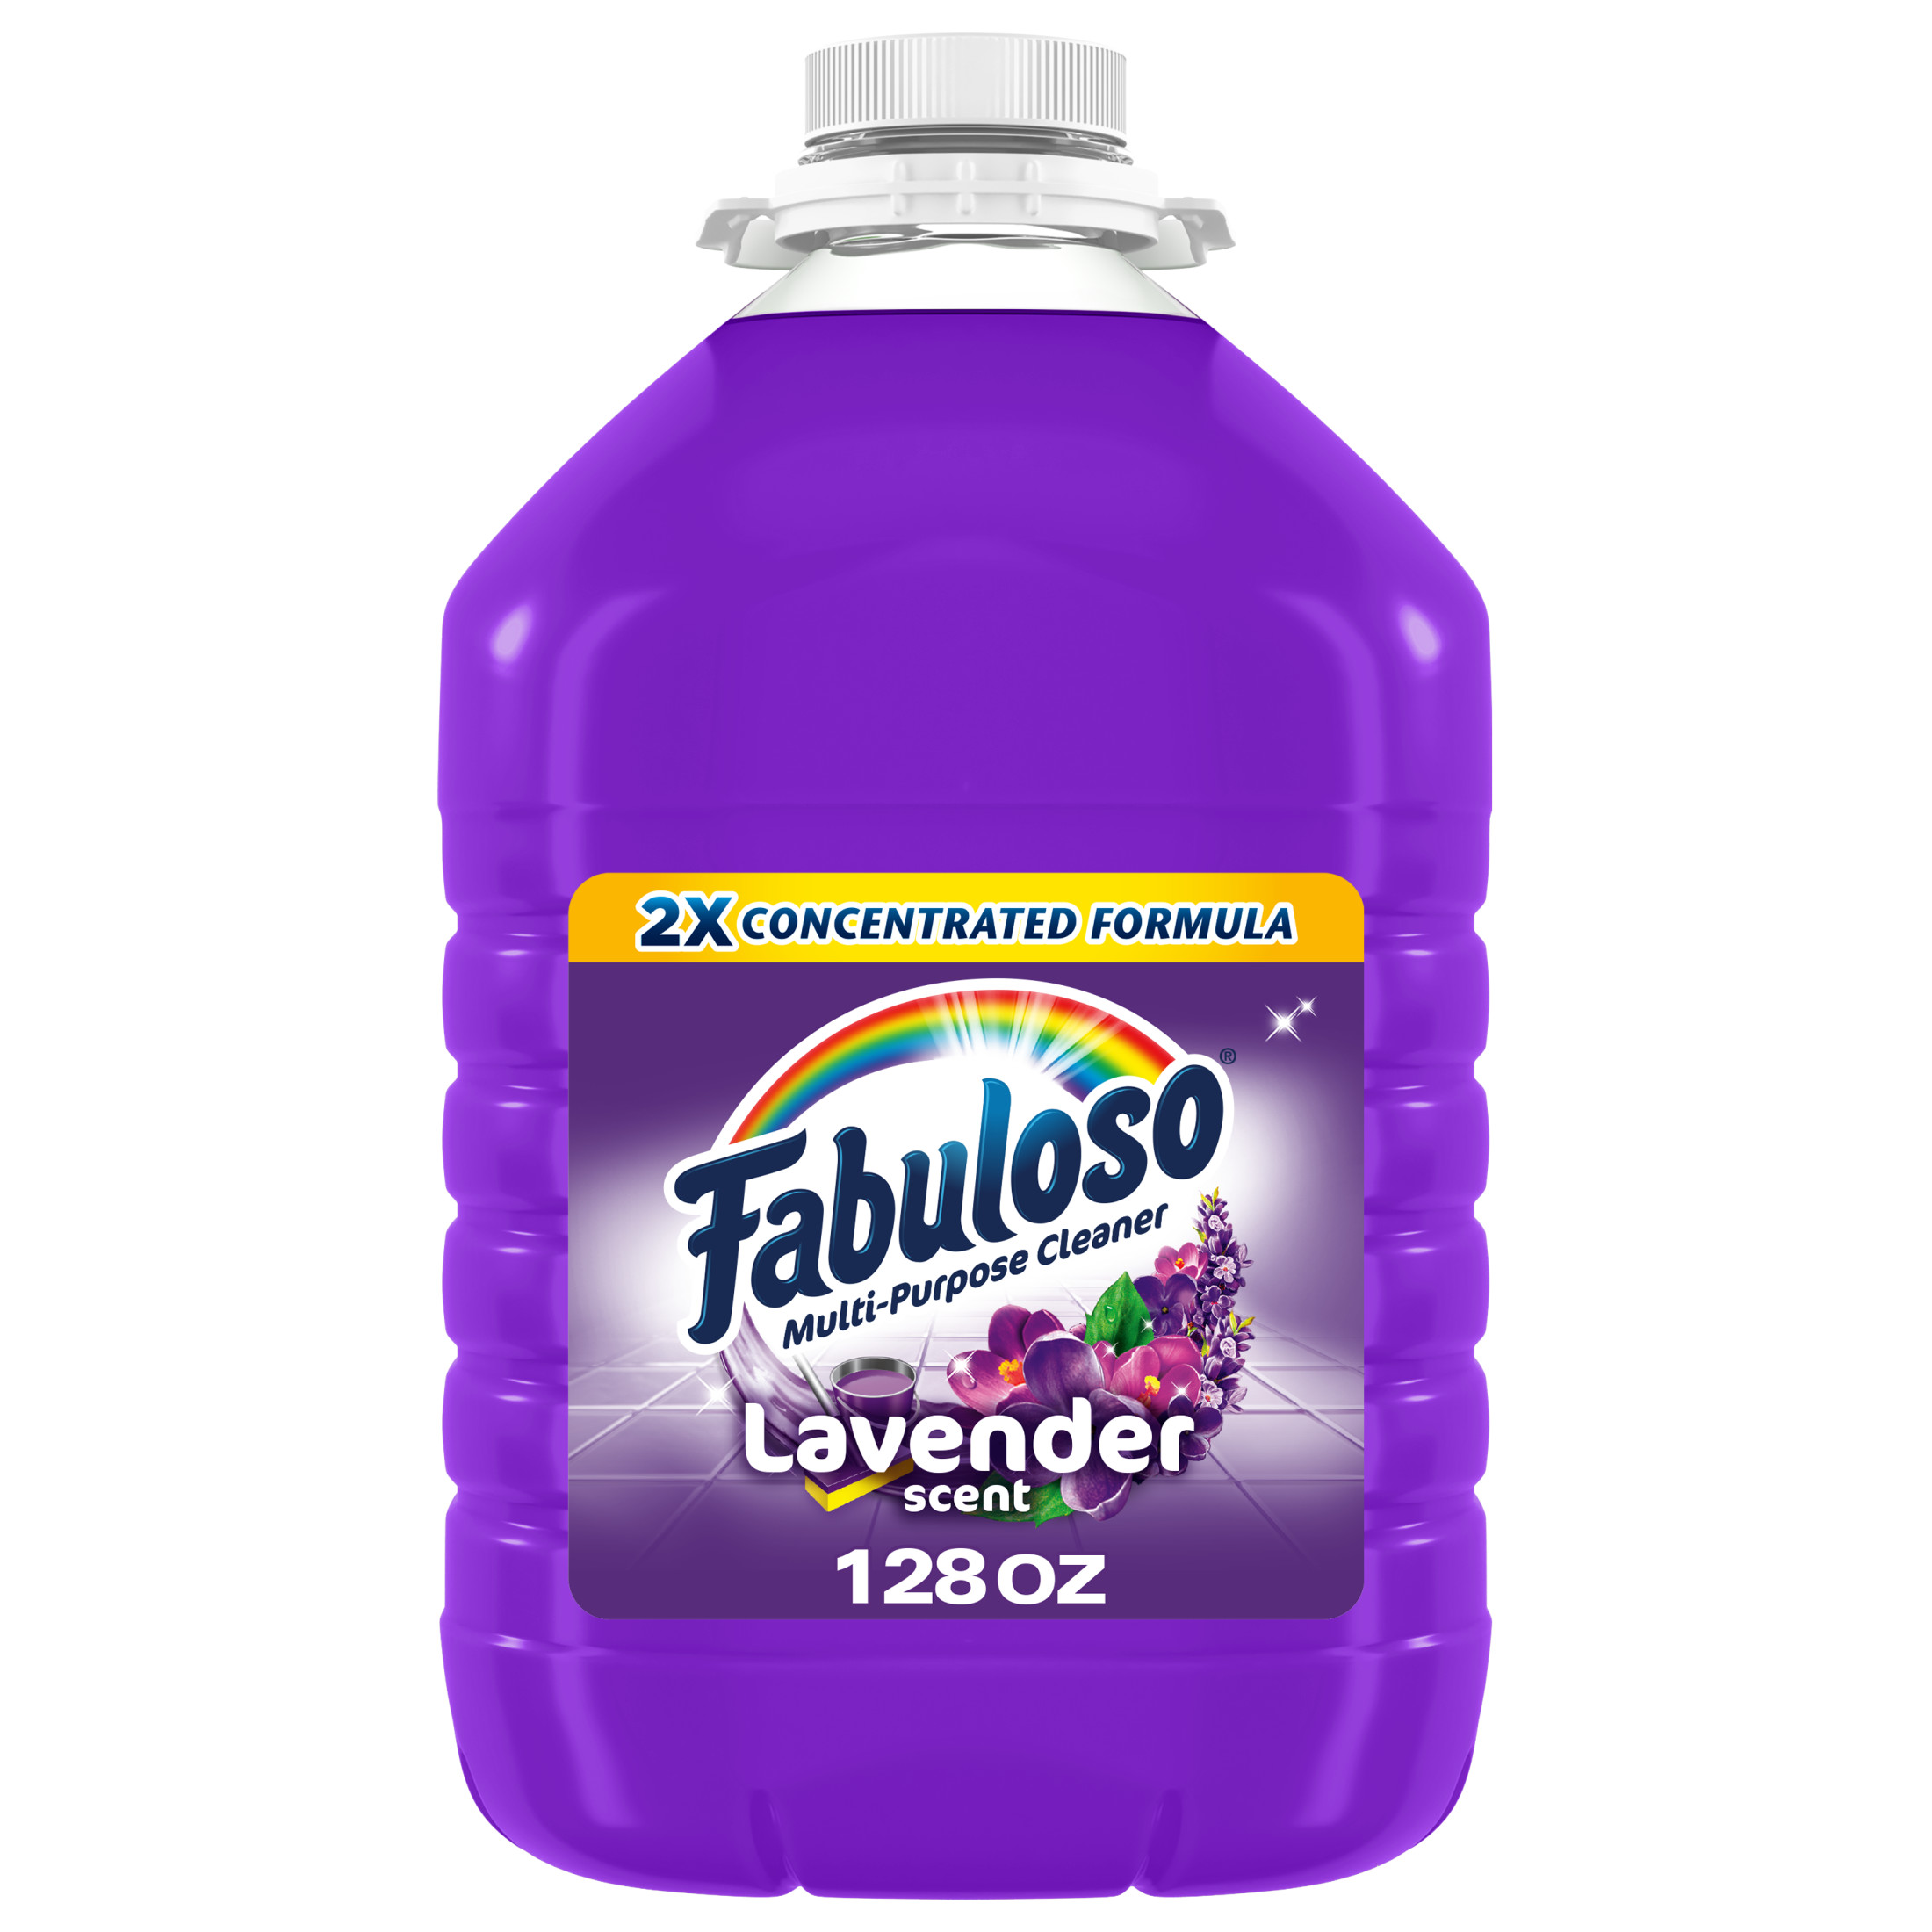 Fabuloso Multi-Purpose Cleaner, 2X Concentrated Formula, Lavender Scent, 128 oz - image 1 of 12